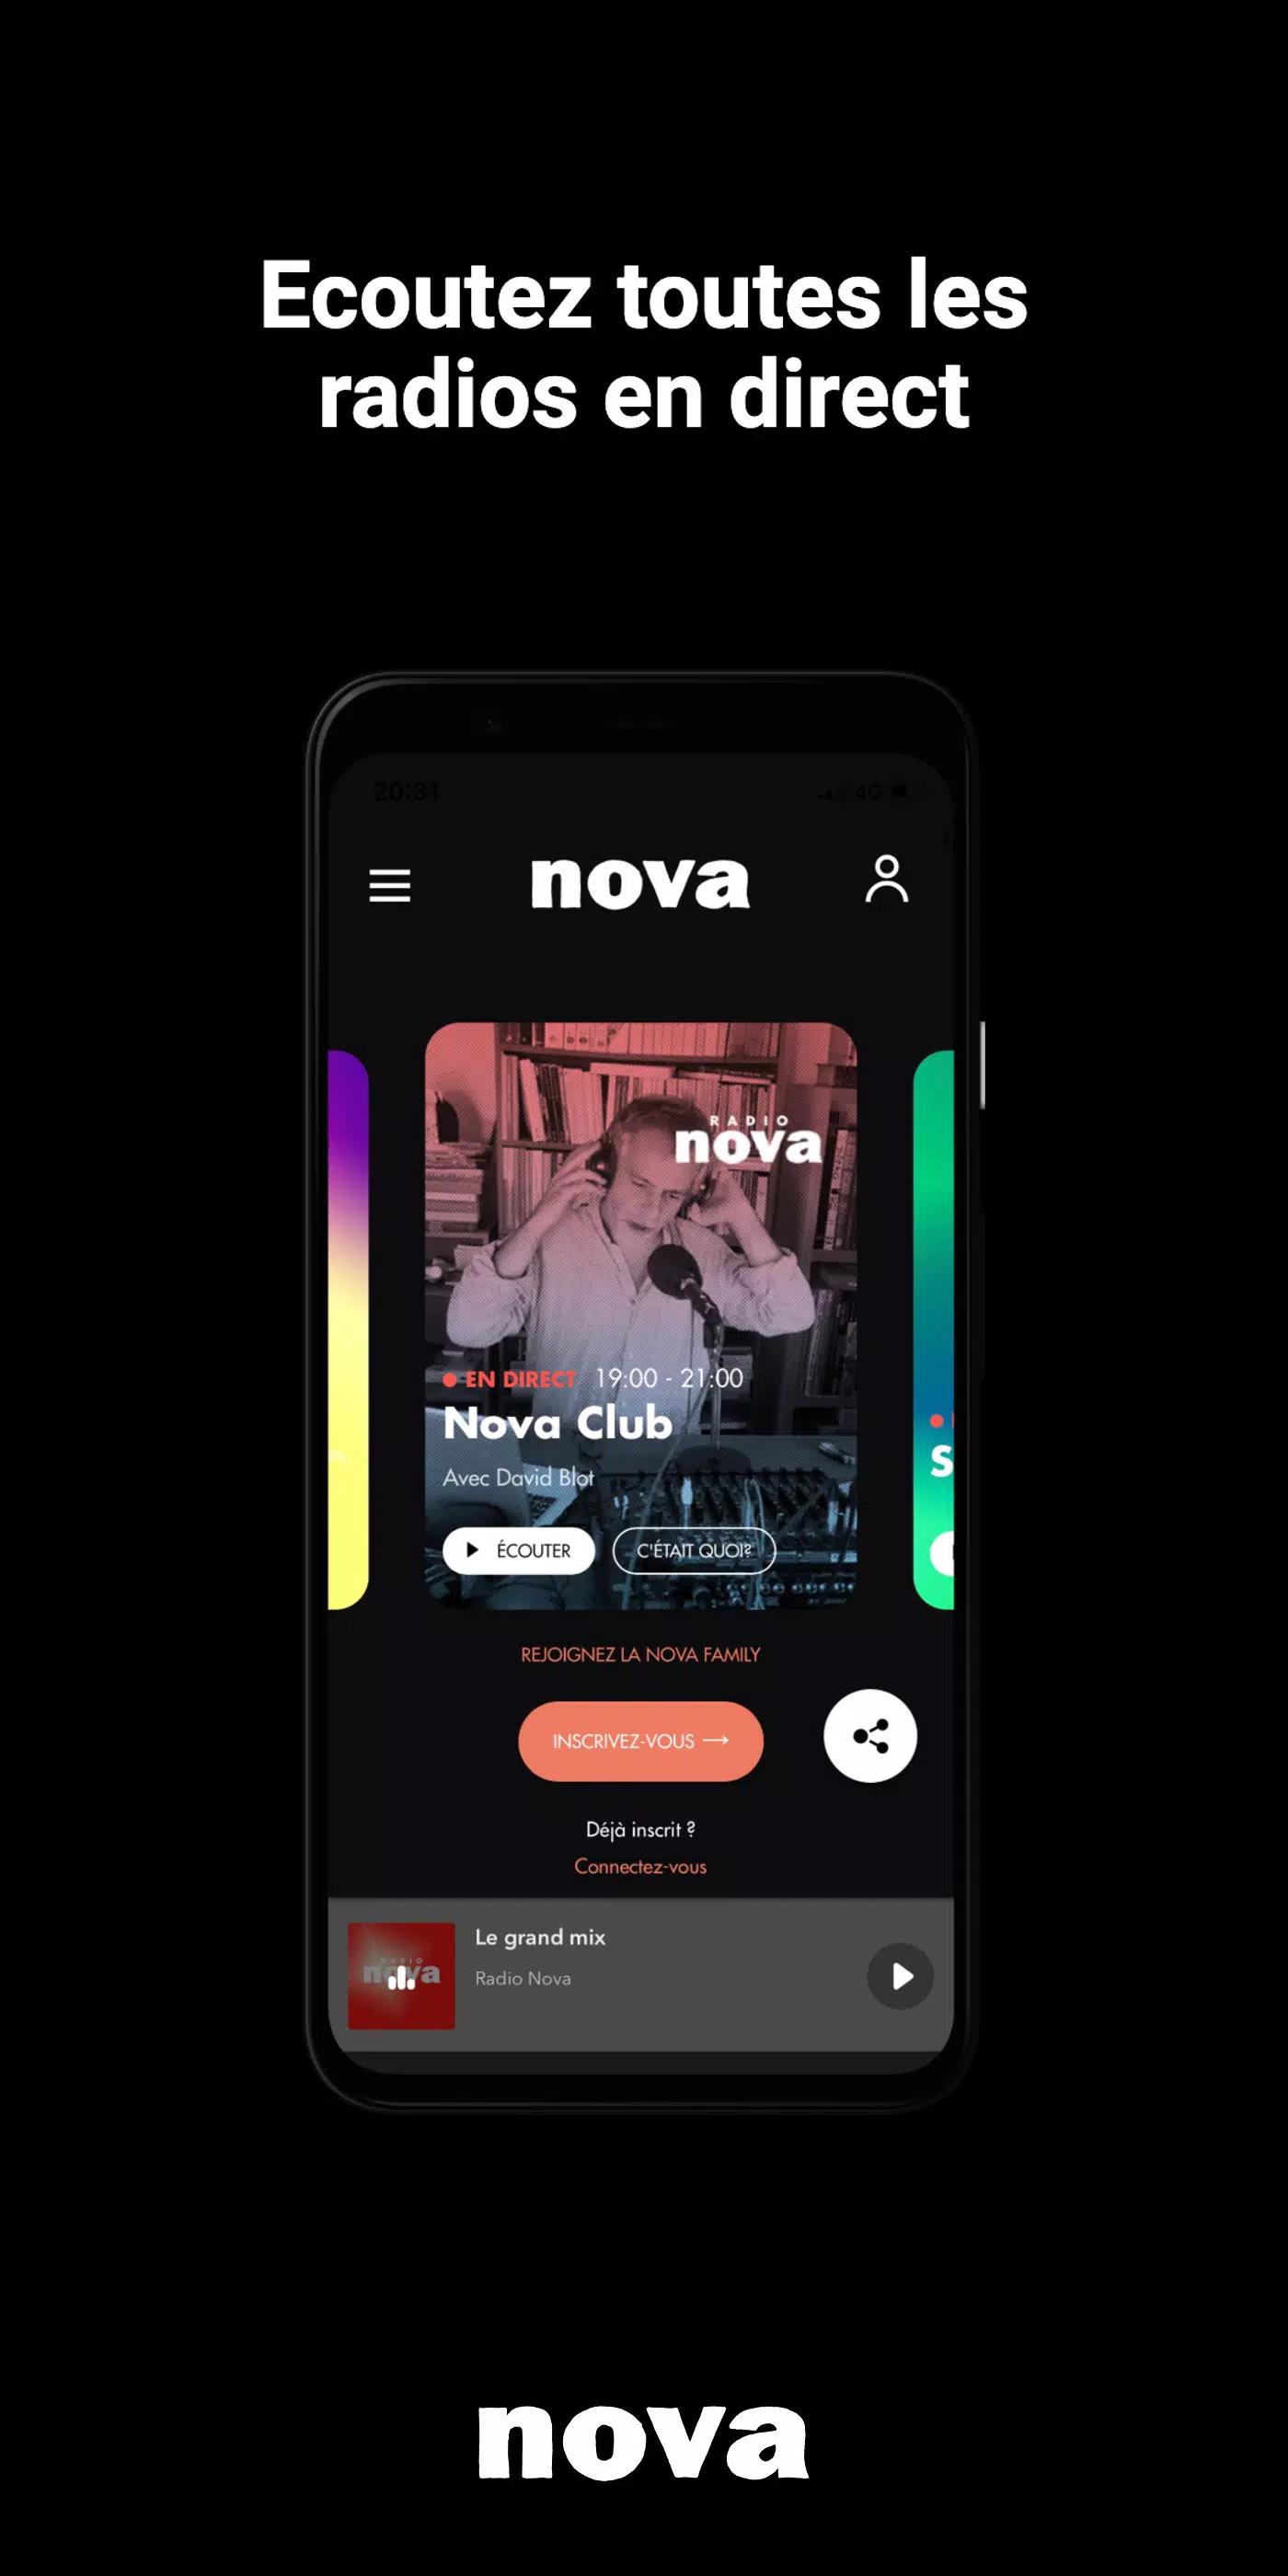 Radio Nova APK for Android Download